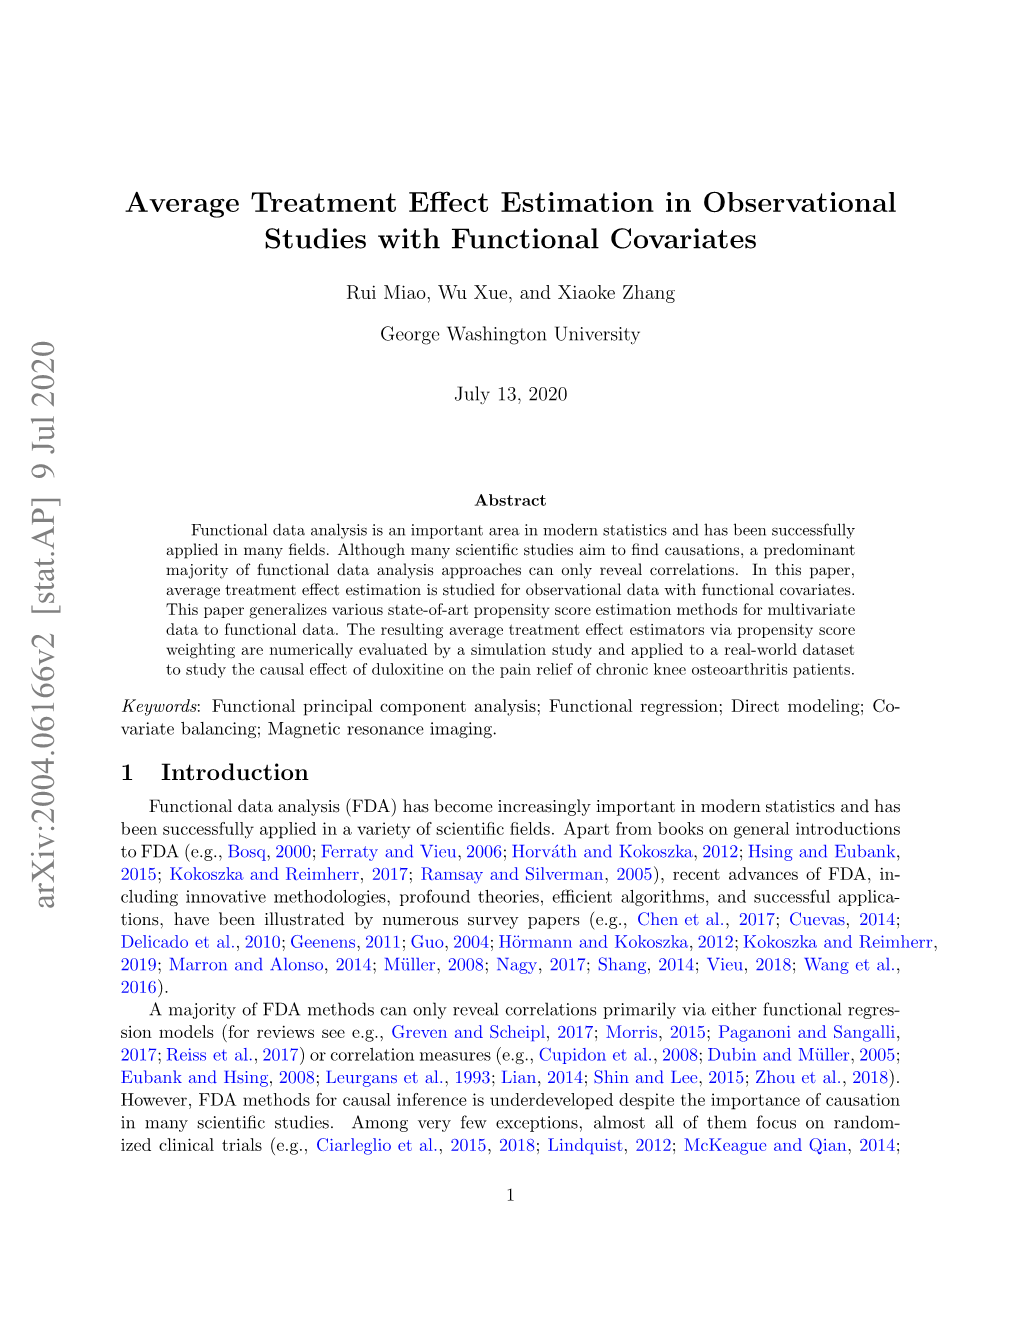 Average Treatment Effect Estimation in Observational Studies